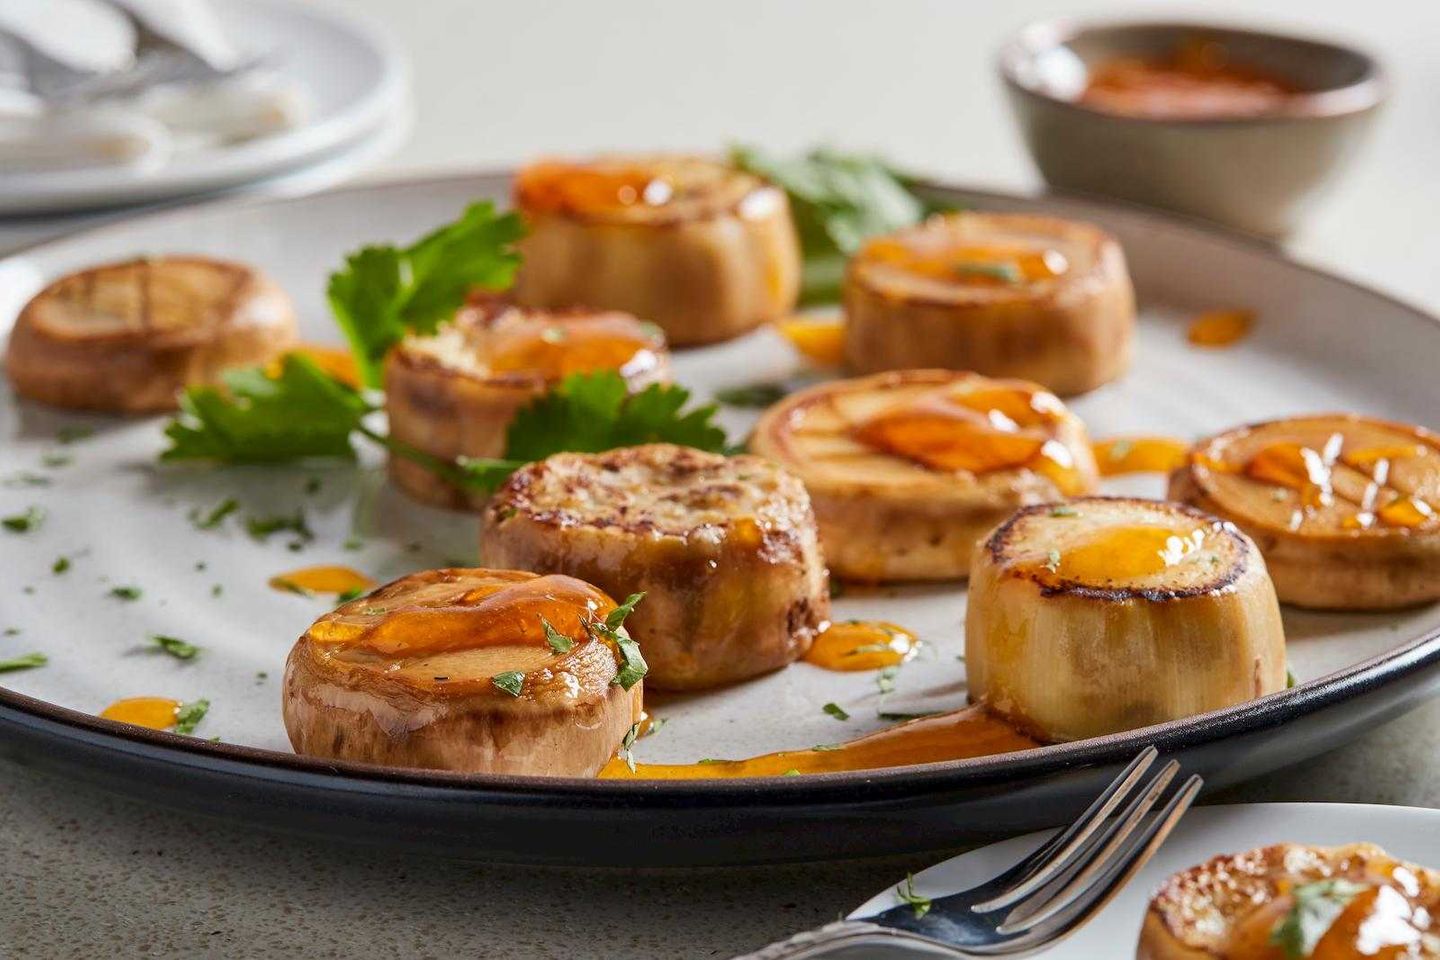 Seared Mushroom & Eggplant “Scallops” with Pineapple-Apricot Glaze